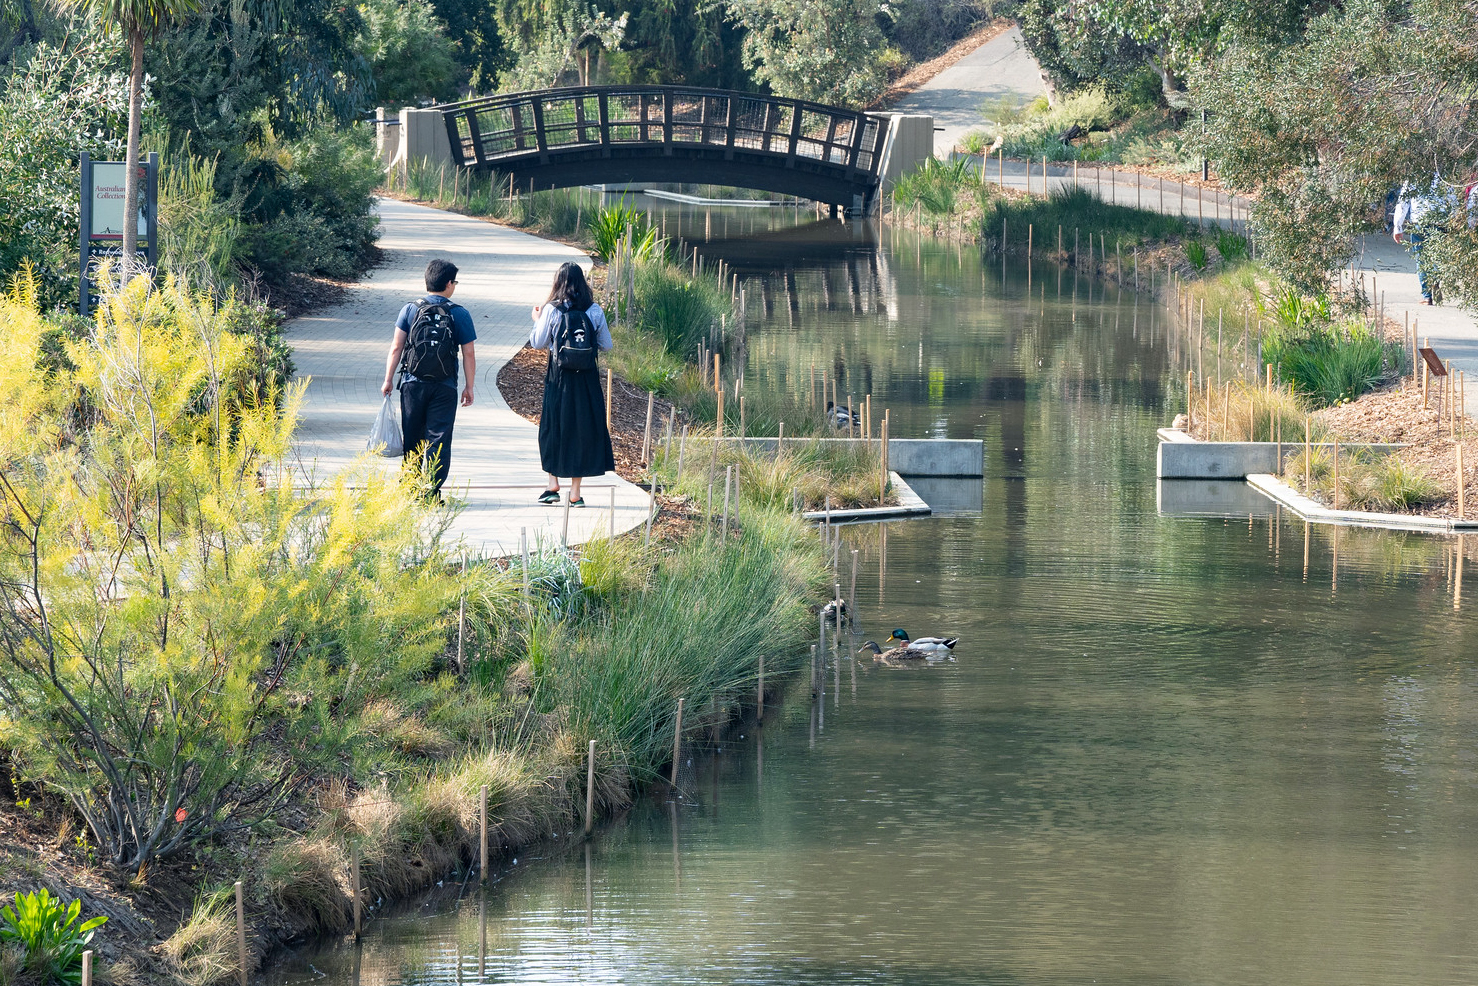 Two people walk next to the Arboretum Waterway